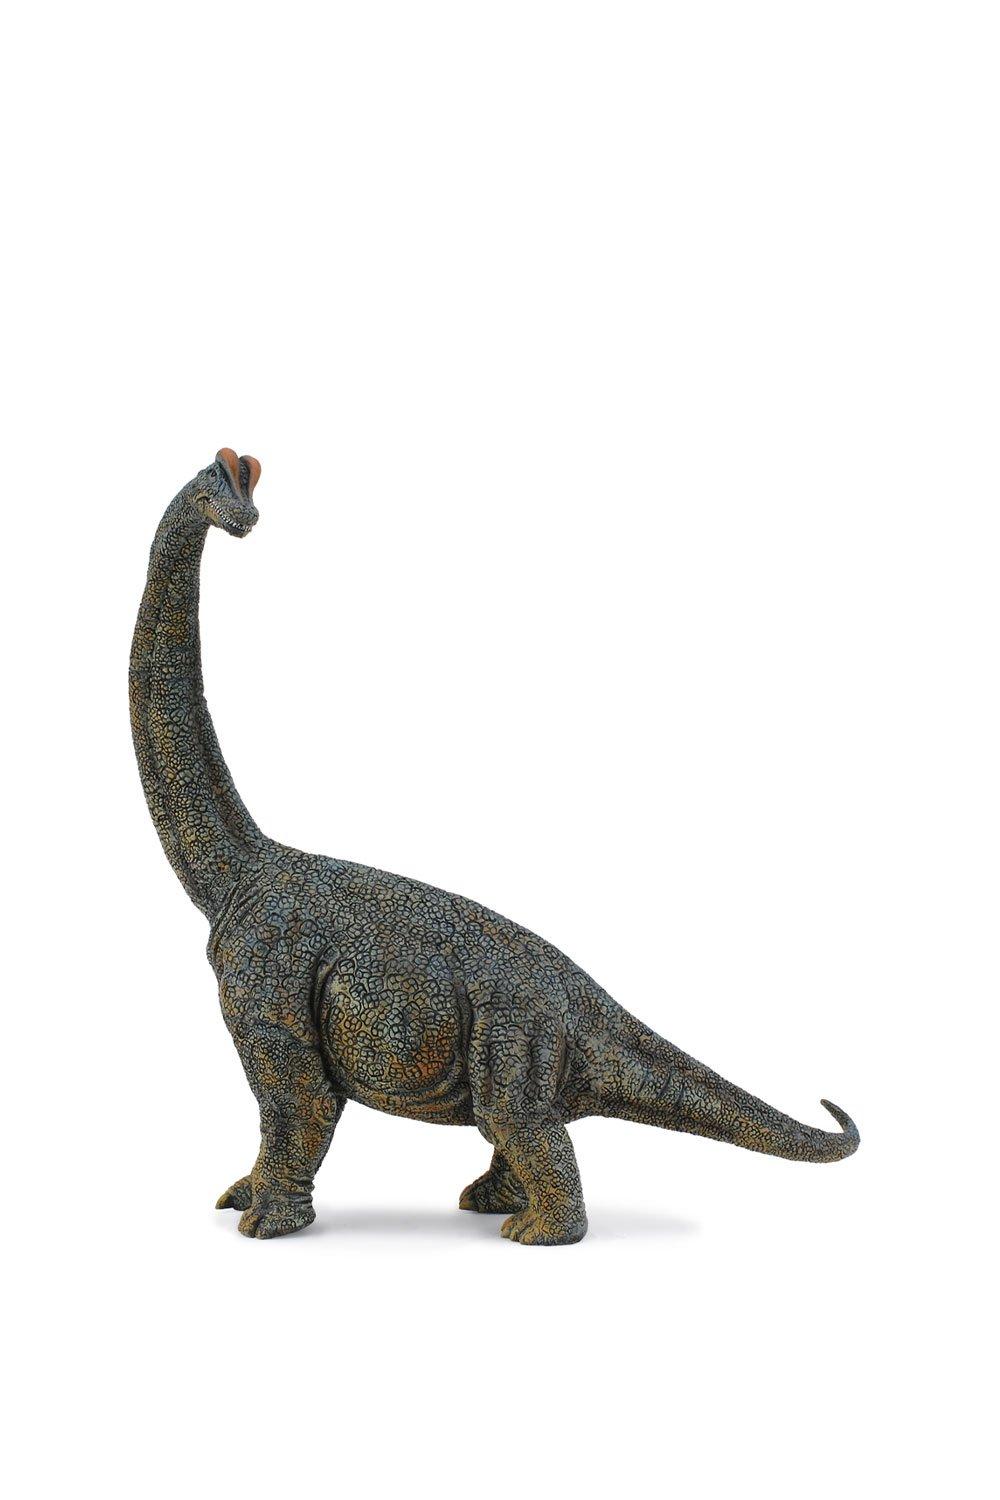 Brachiosaurus Dinosaur Toy